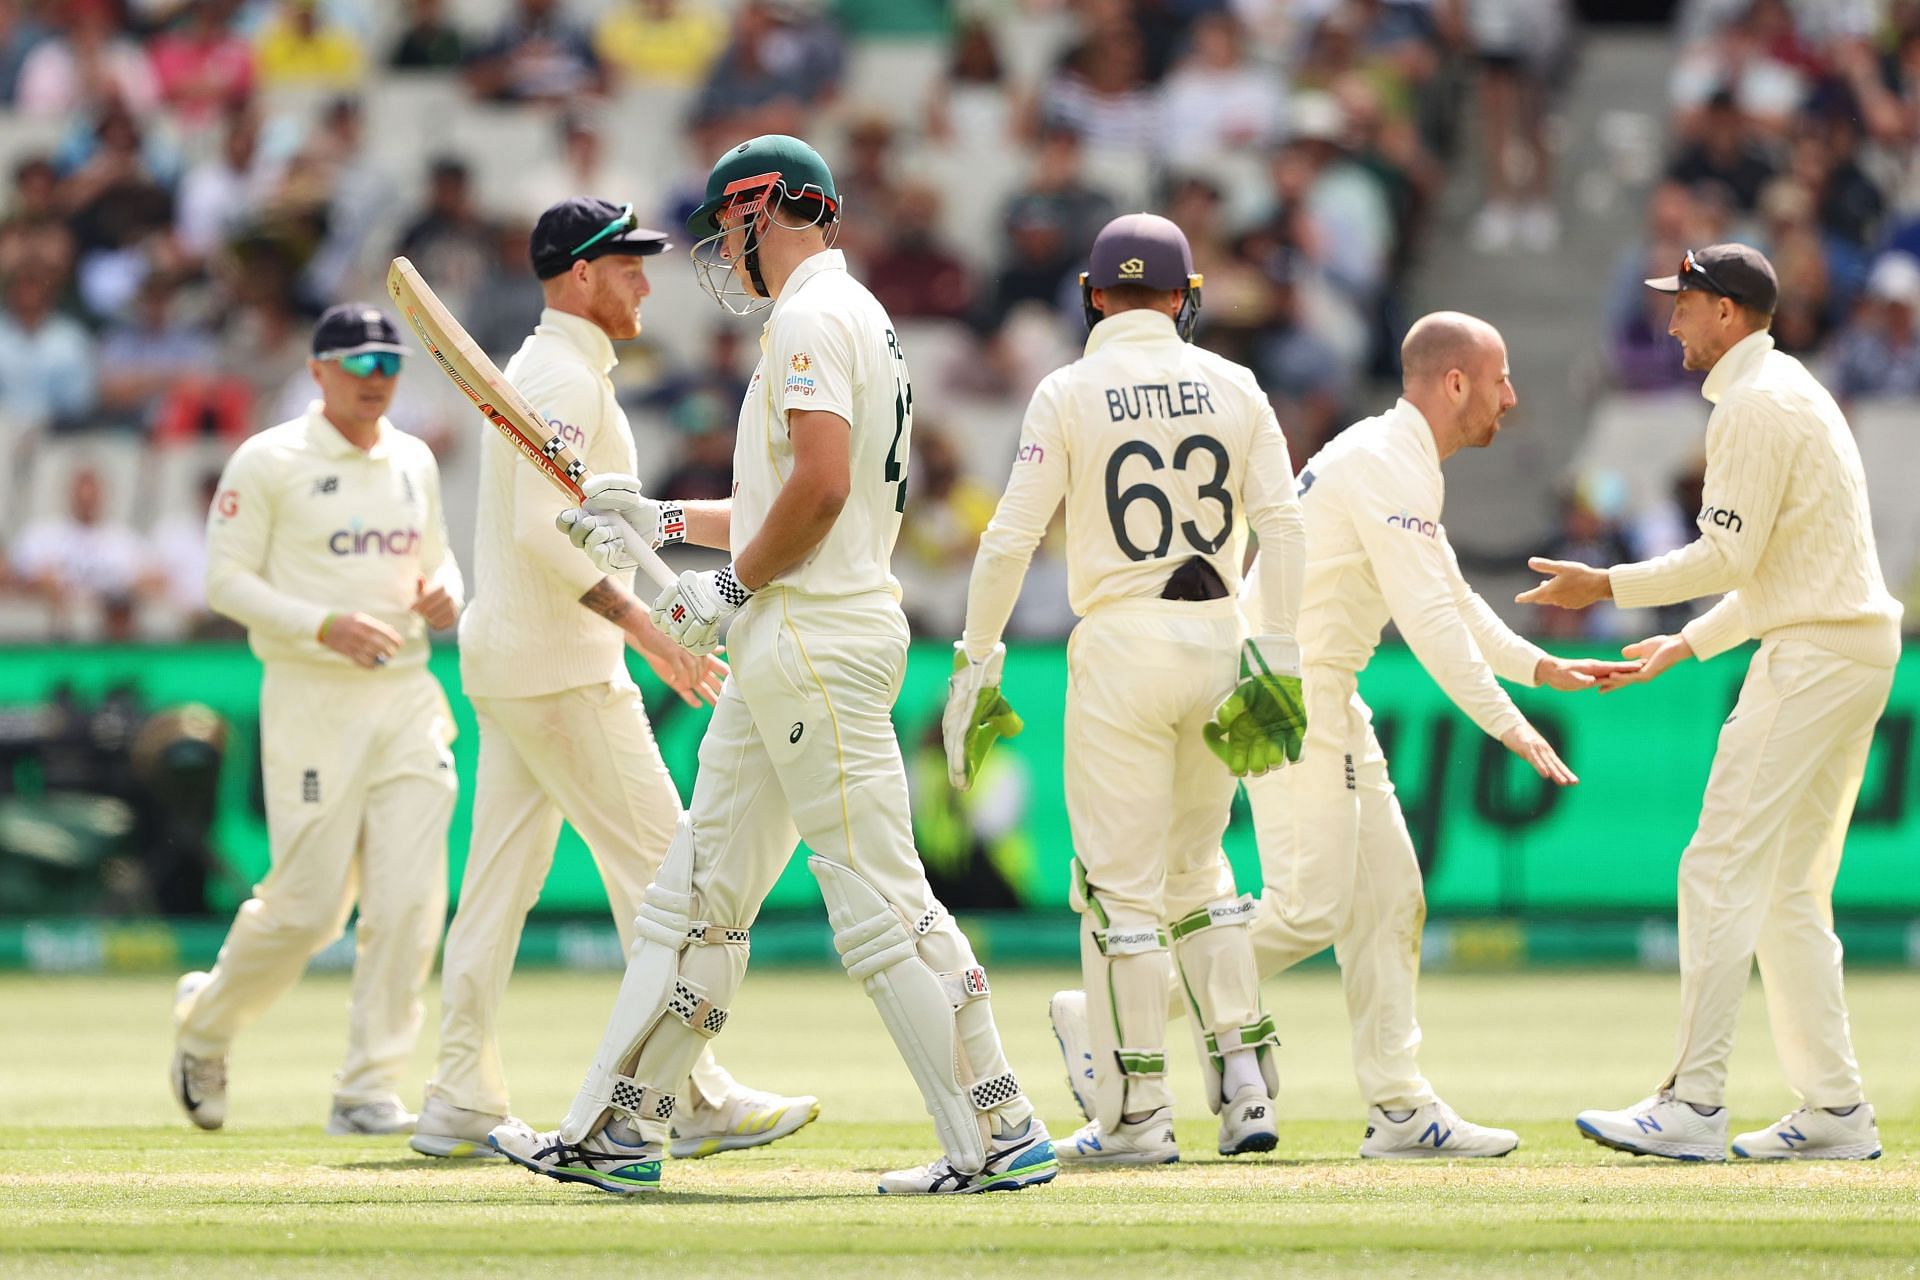 Australia v England - 3rd Test: Day 2